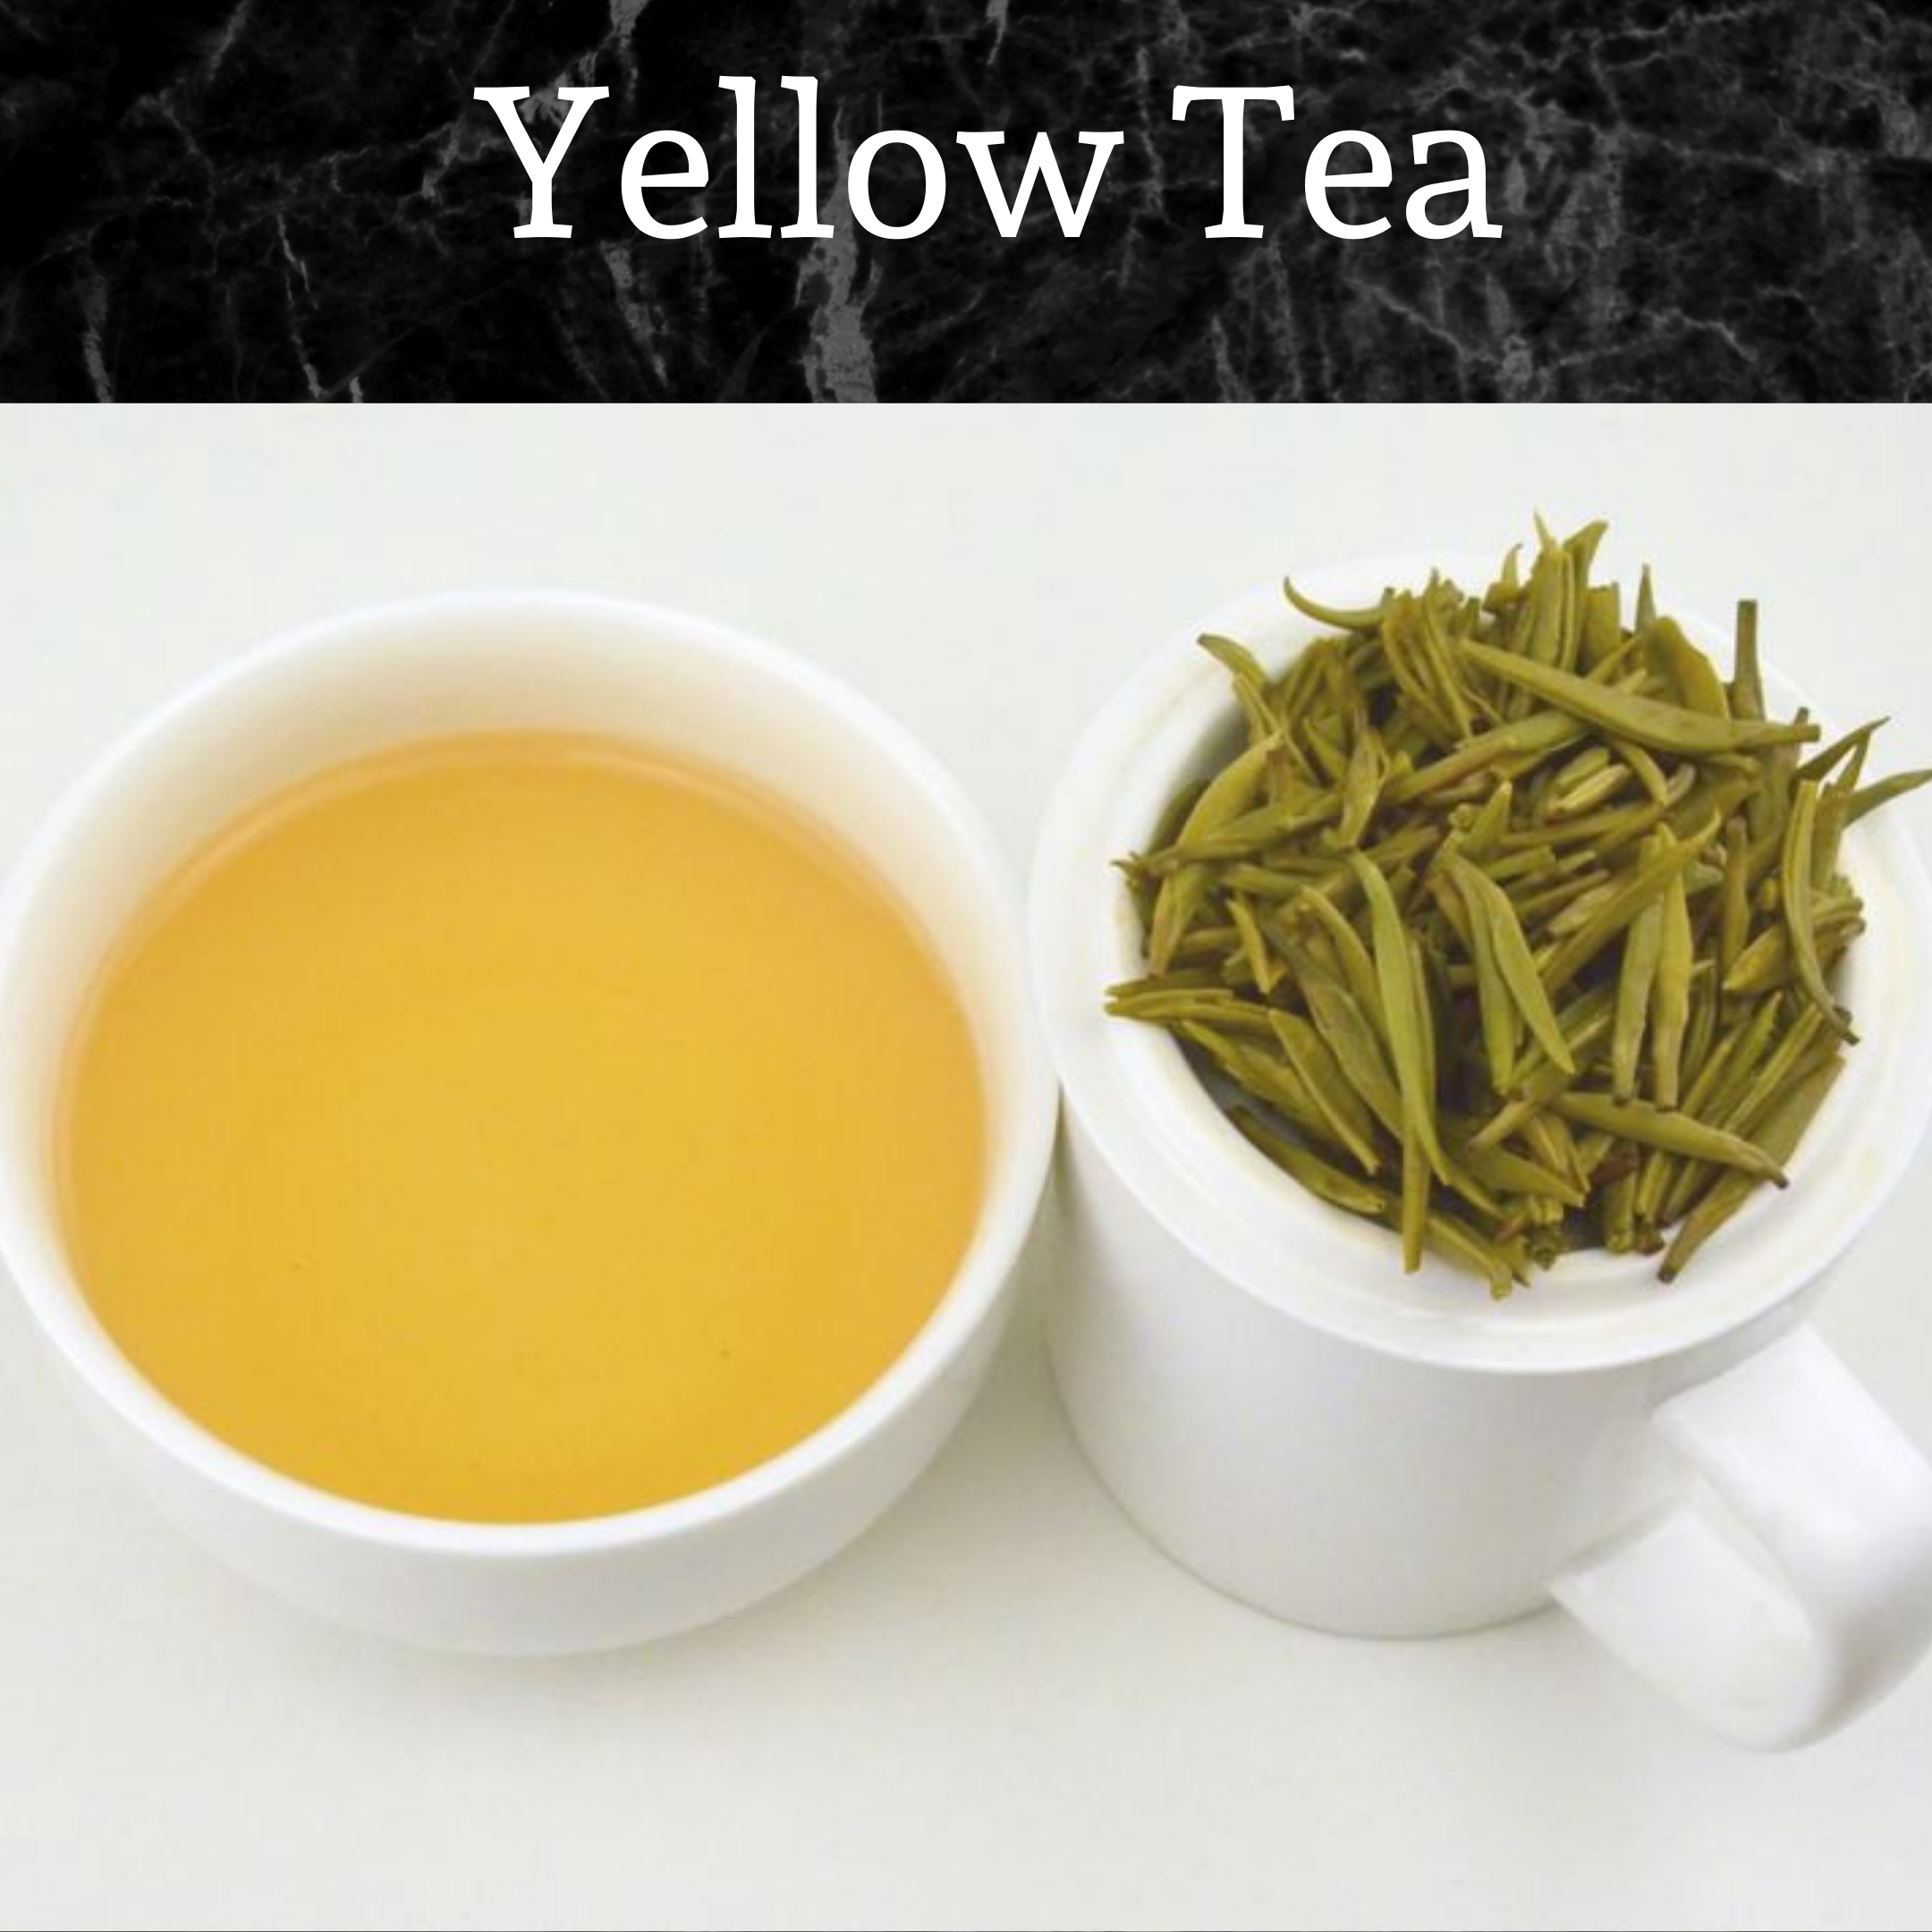 Yellow tea leaves and brewed tea